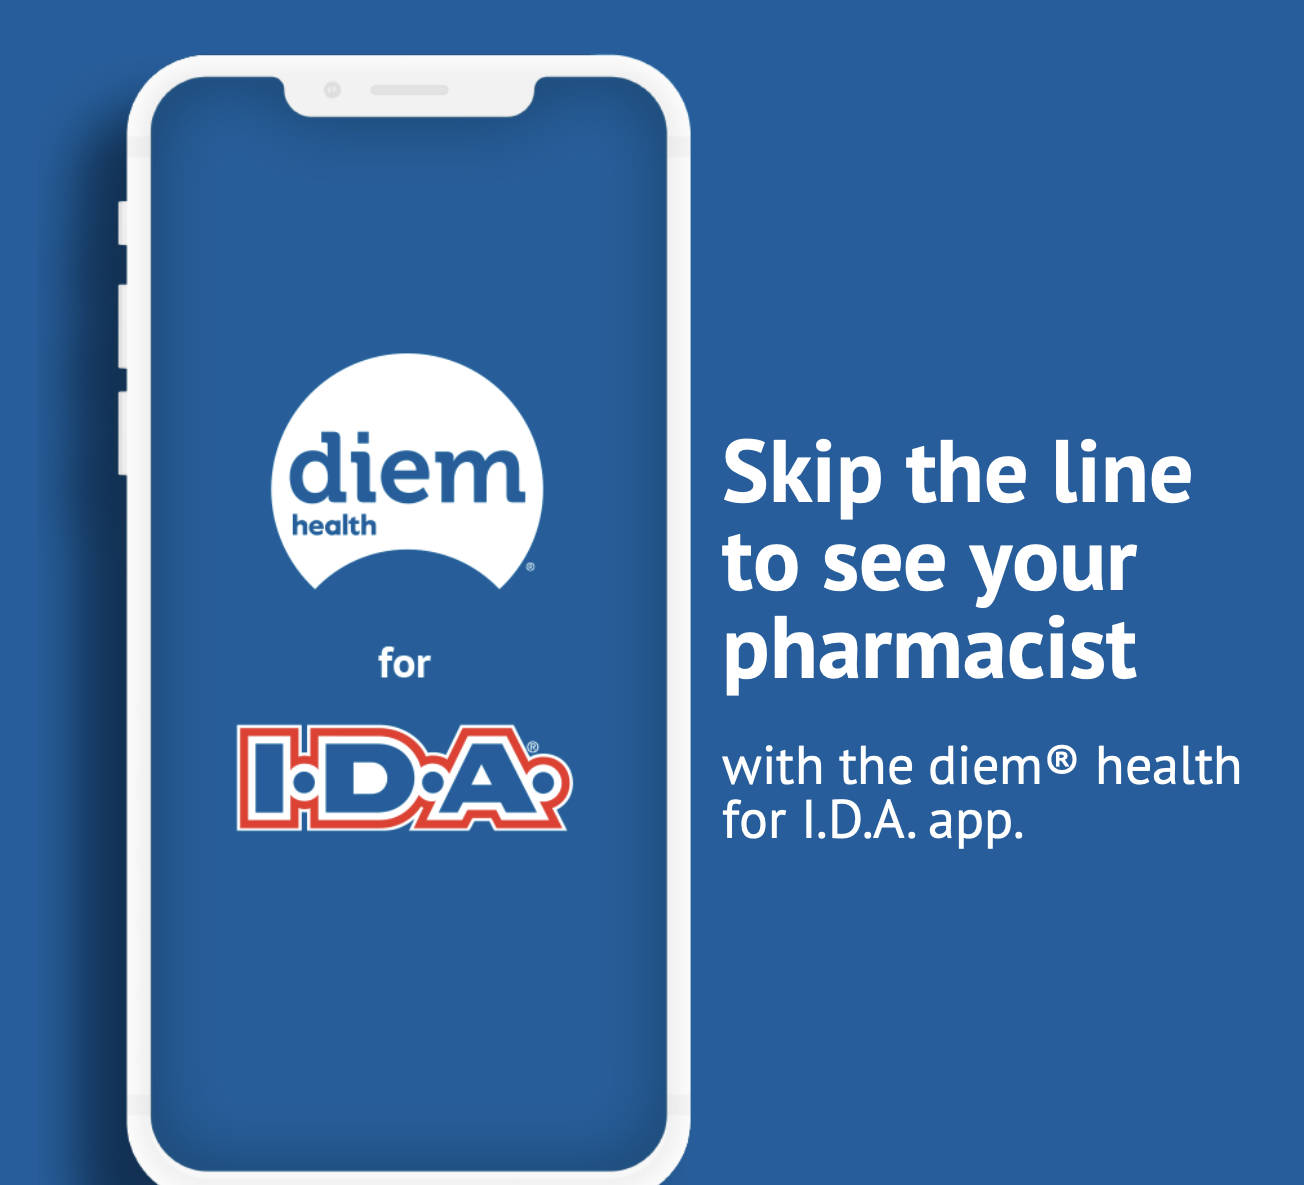 Get the Diem health app for IDA